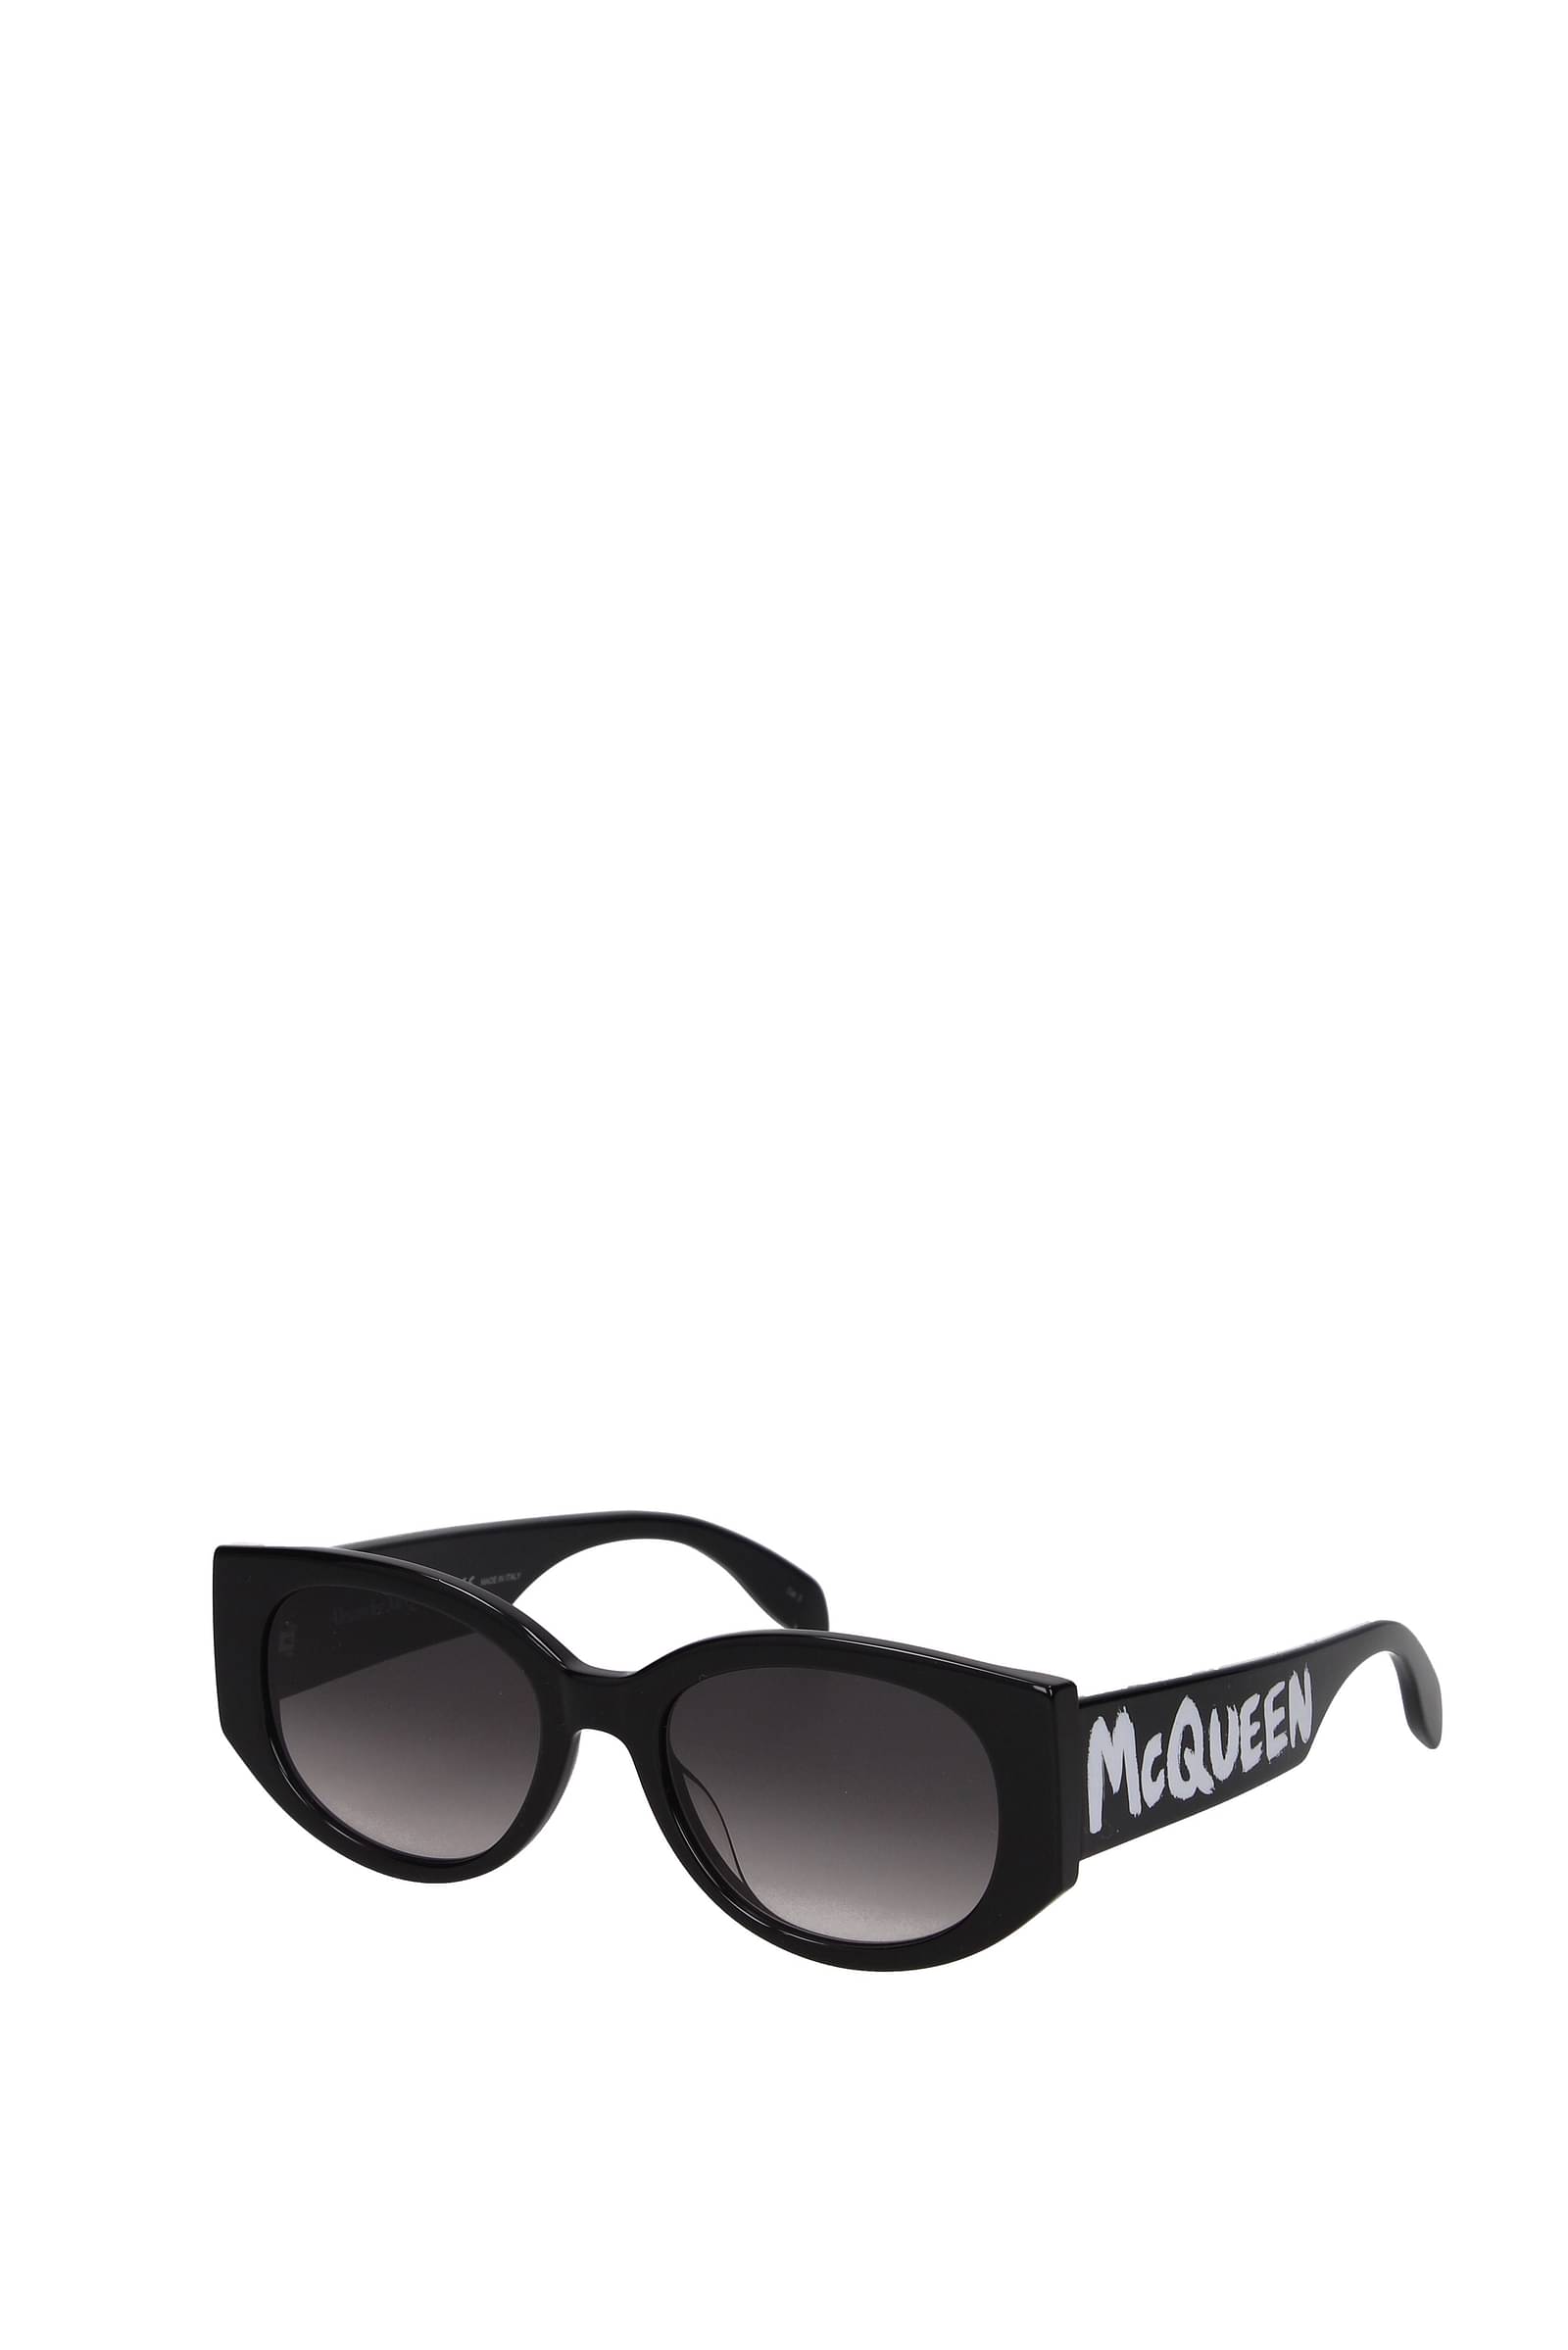 Top more than 157 alexander mcqueen sunglasses black latest